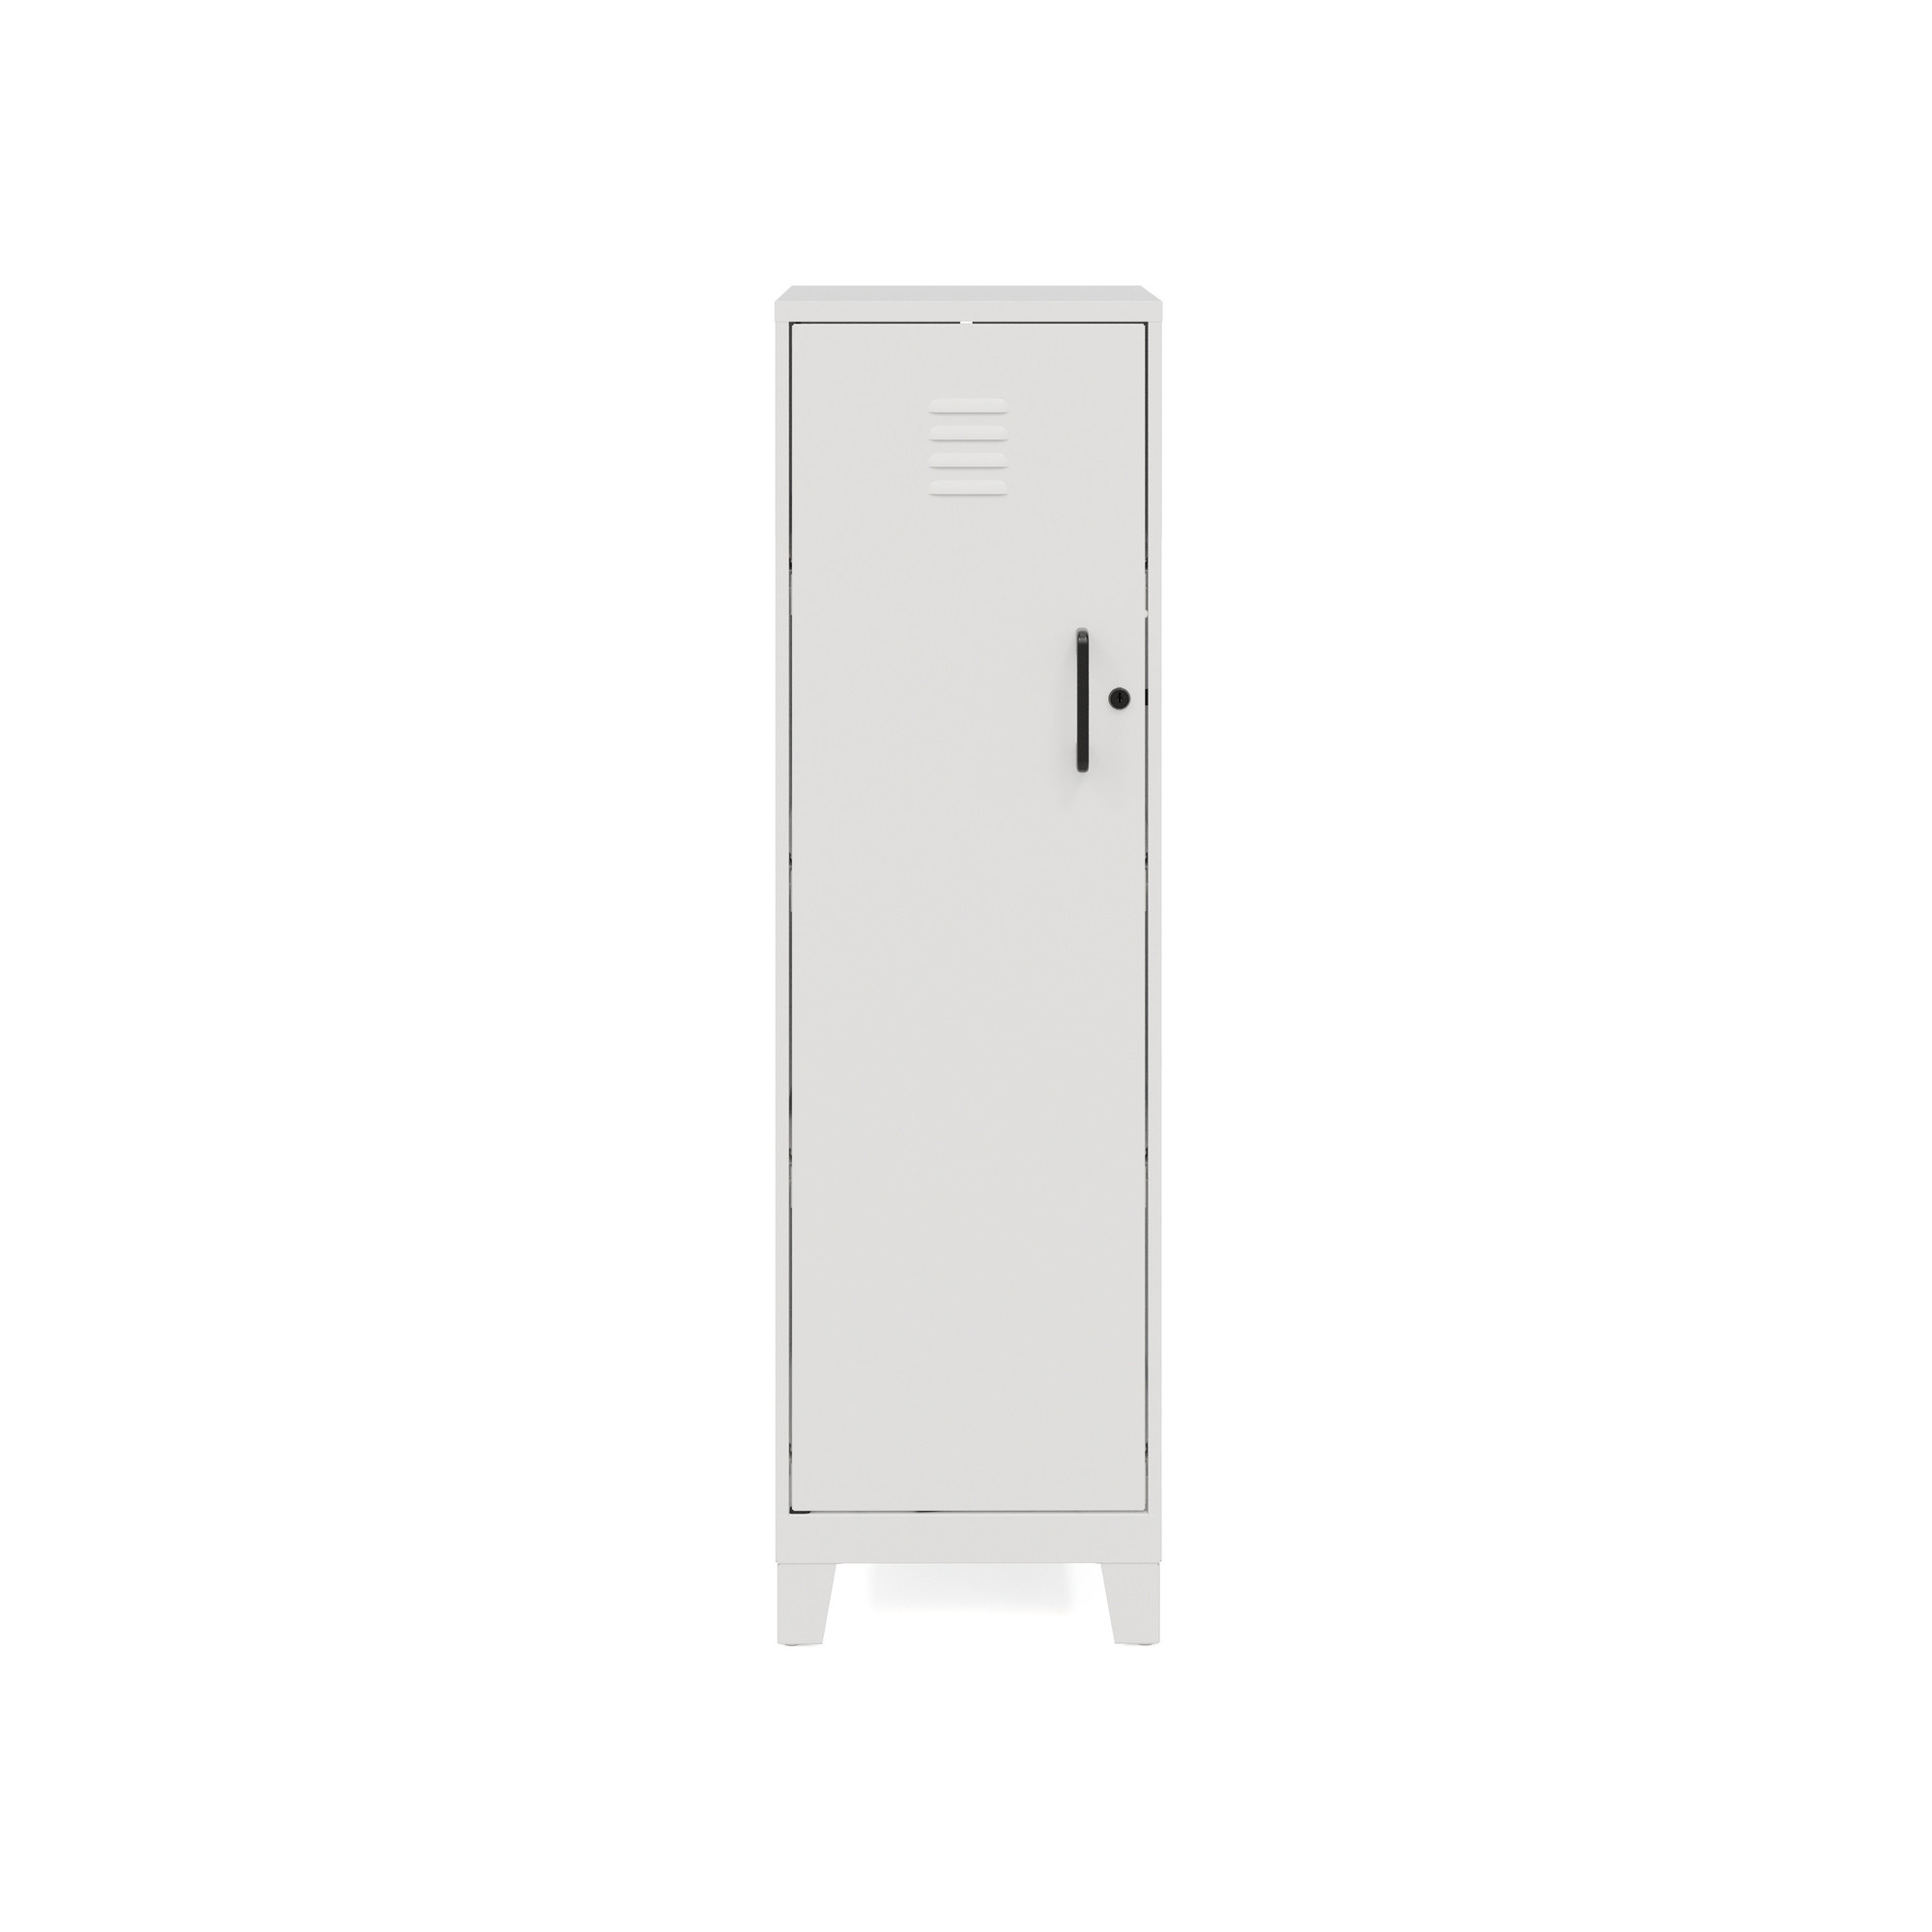 Hirsh Industries, 4 Shelf Storage Locker Cabinet, Height 49.38 in, Width 14.25 in, Color Off White, Model 25226